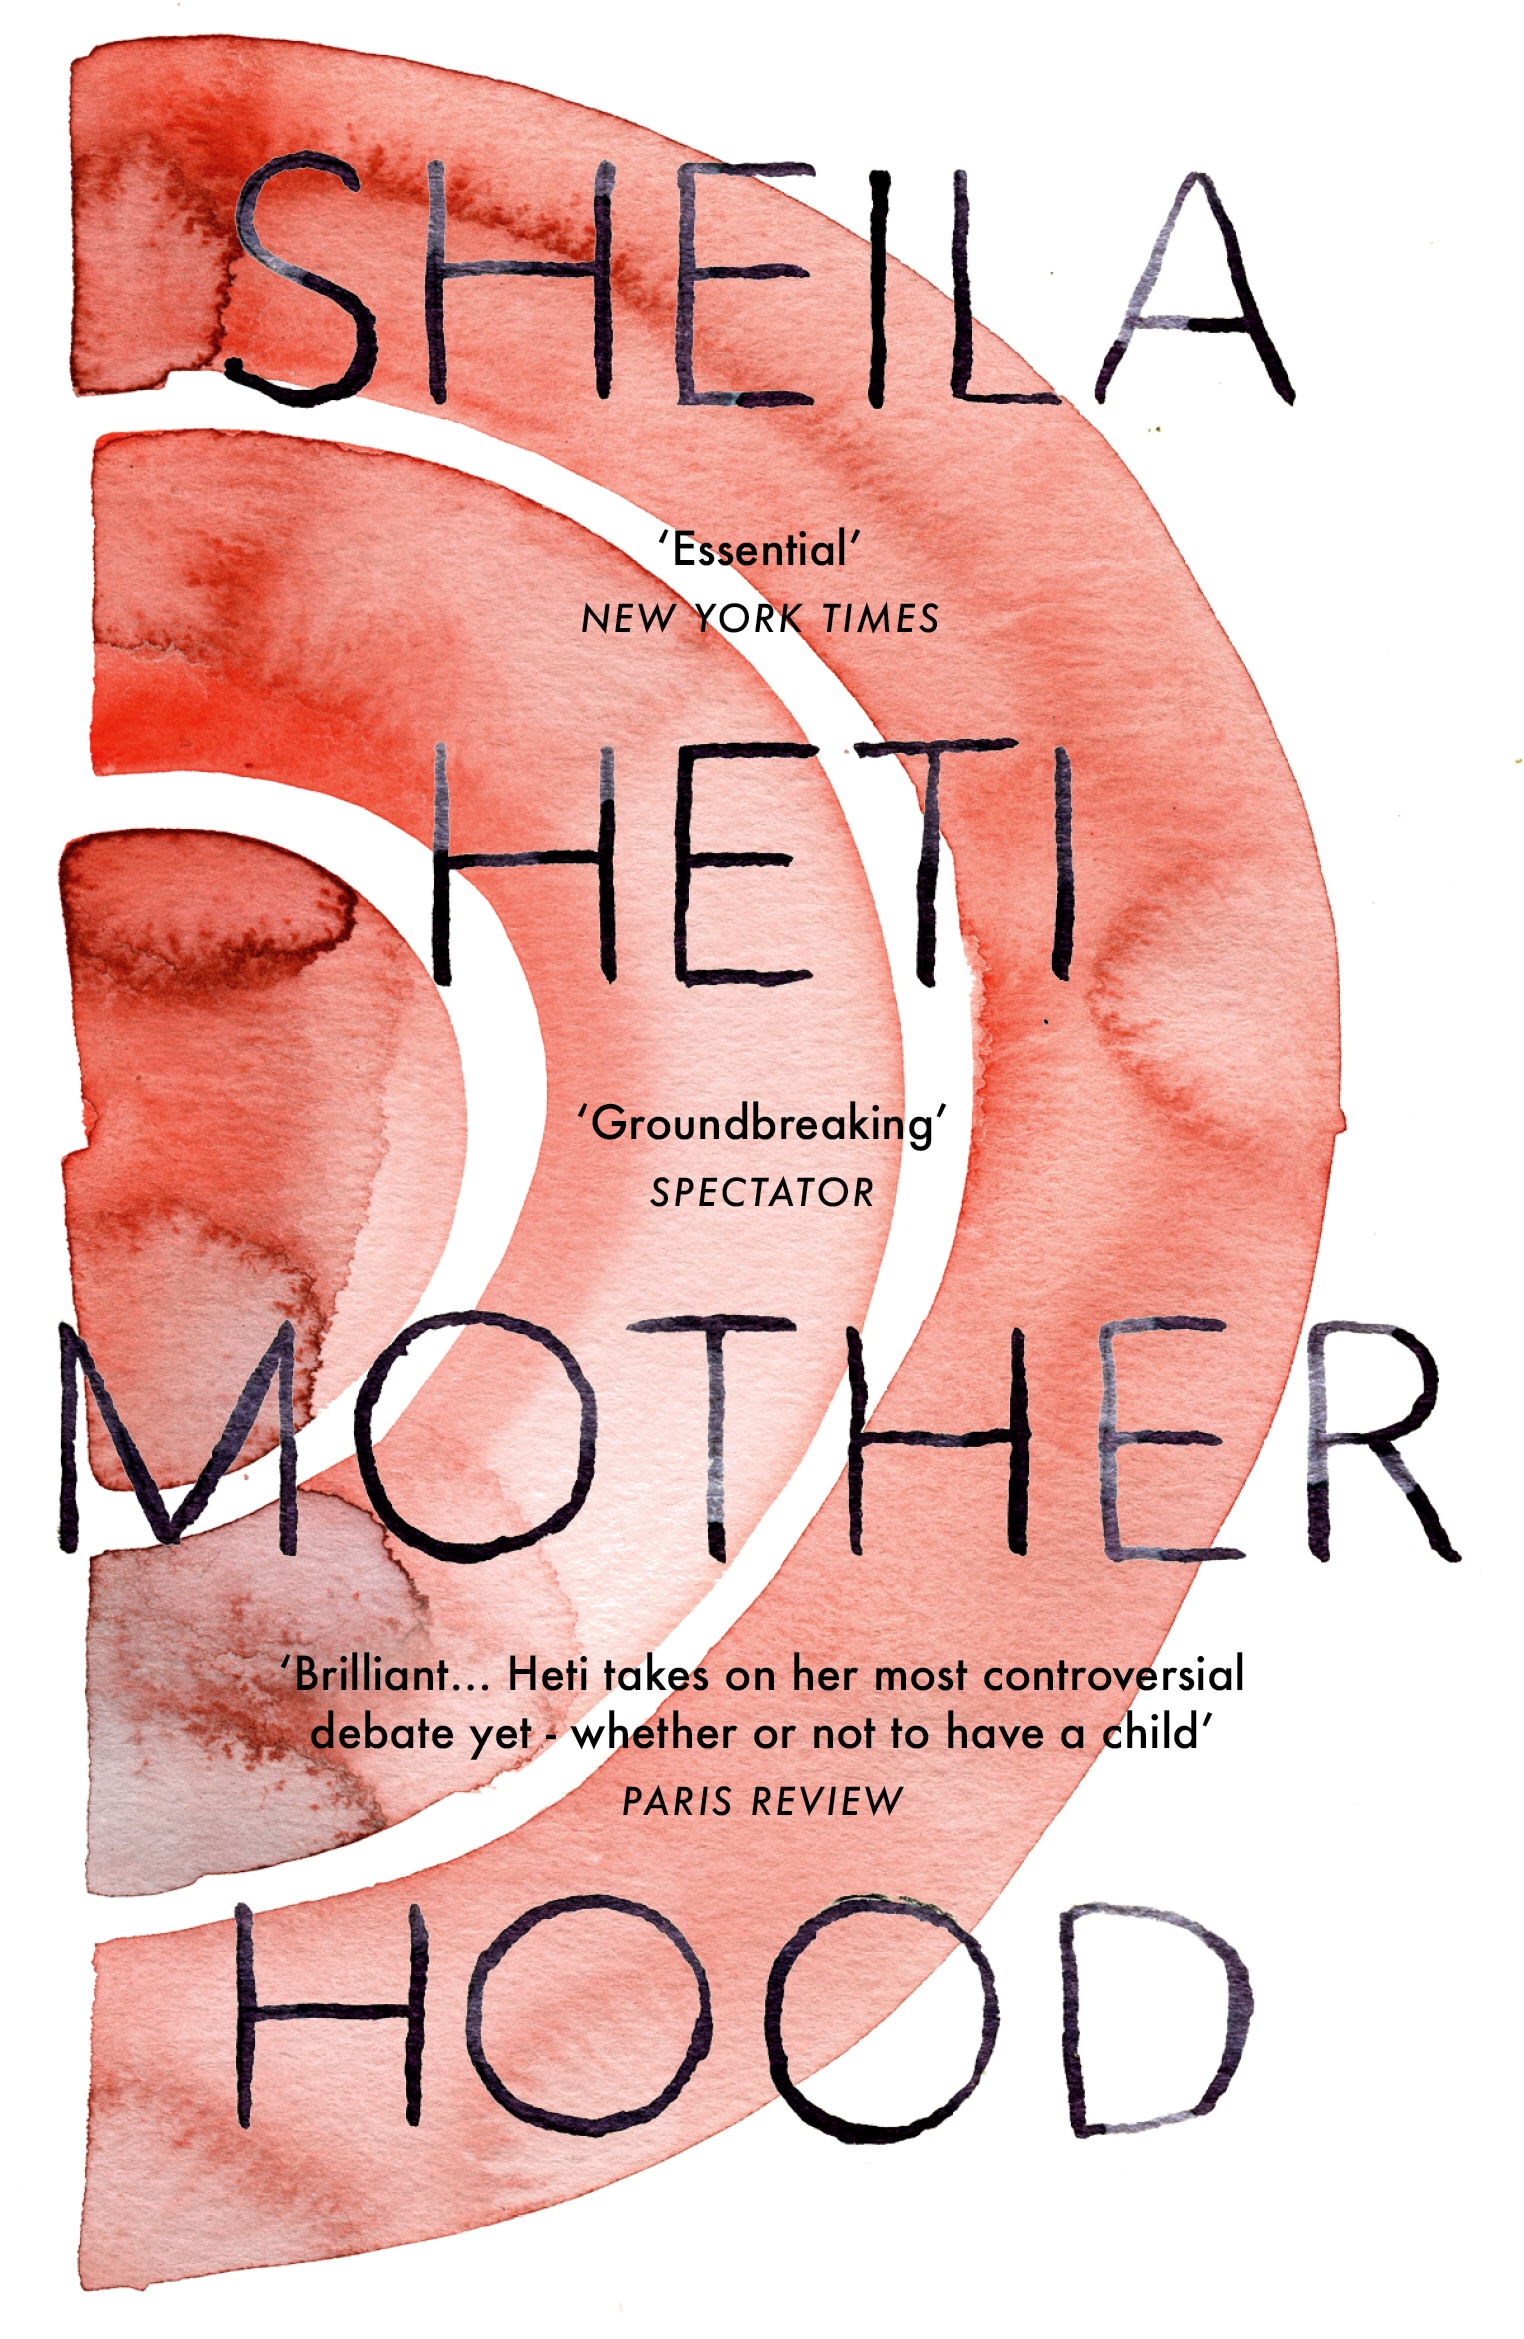 Book “Motherhood” by Sheila Heti — May 30, 2019